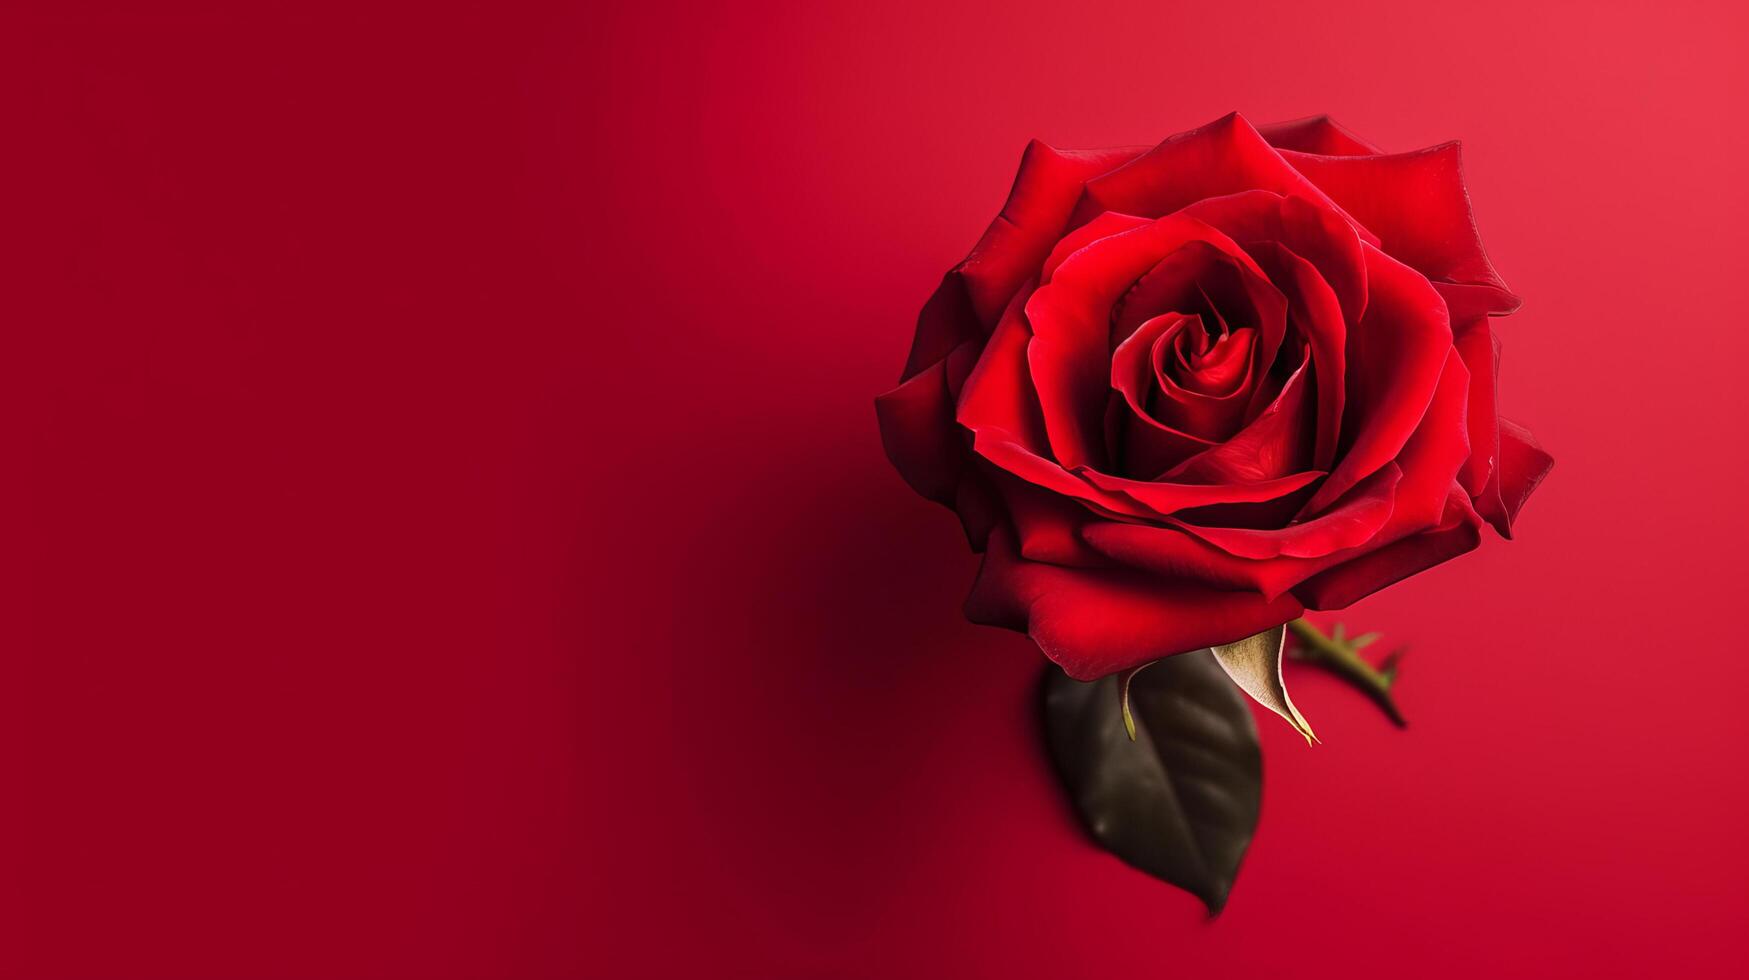 Red rose background. Illustration photo